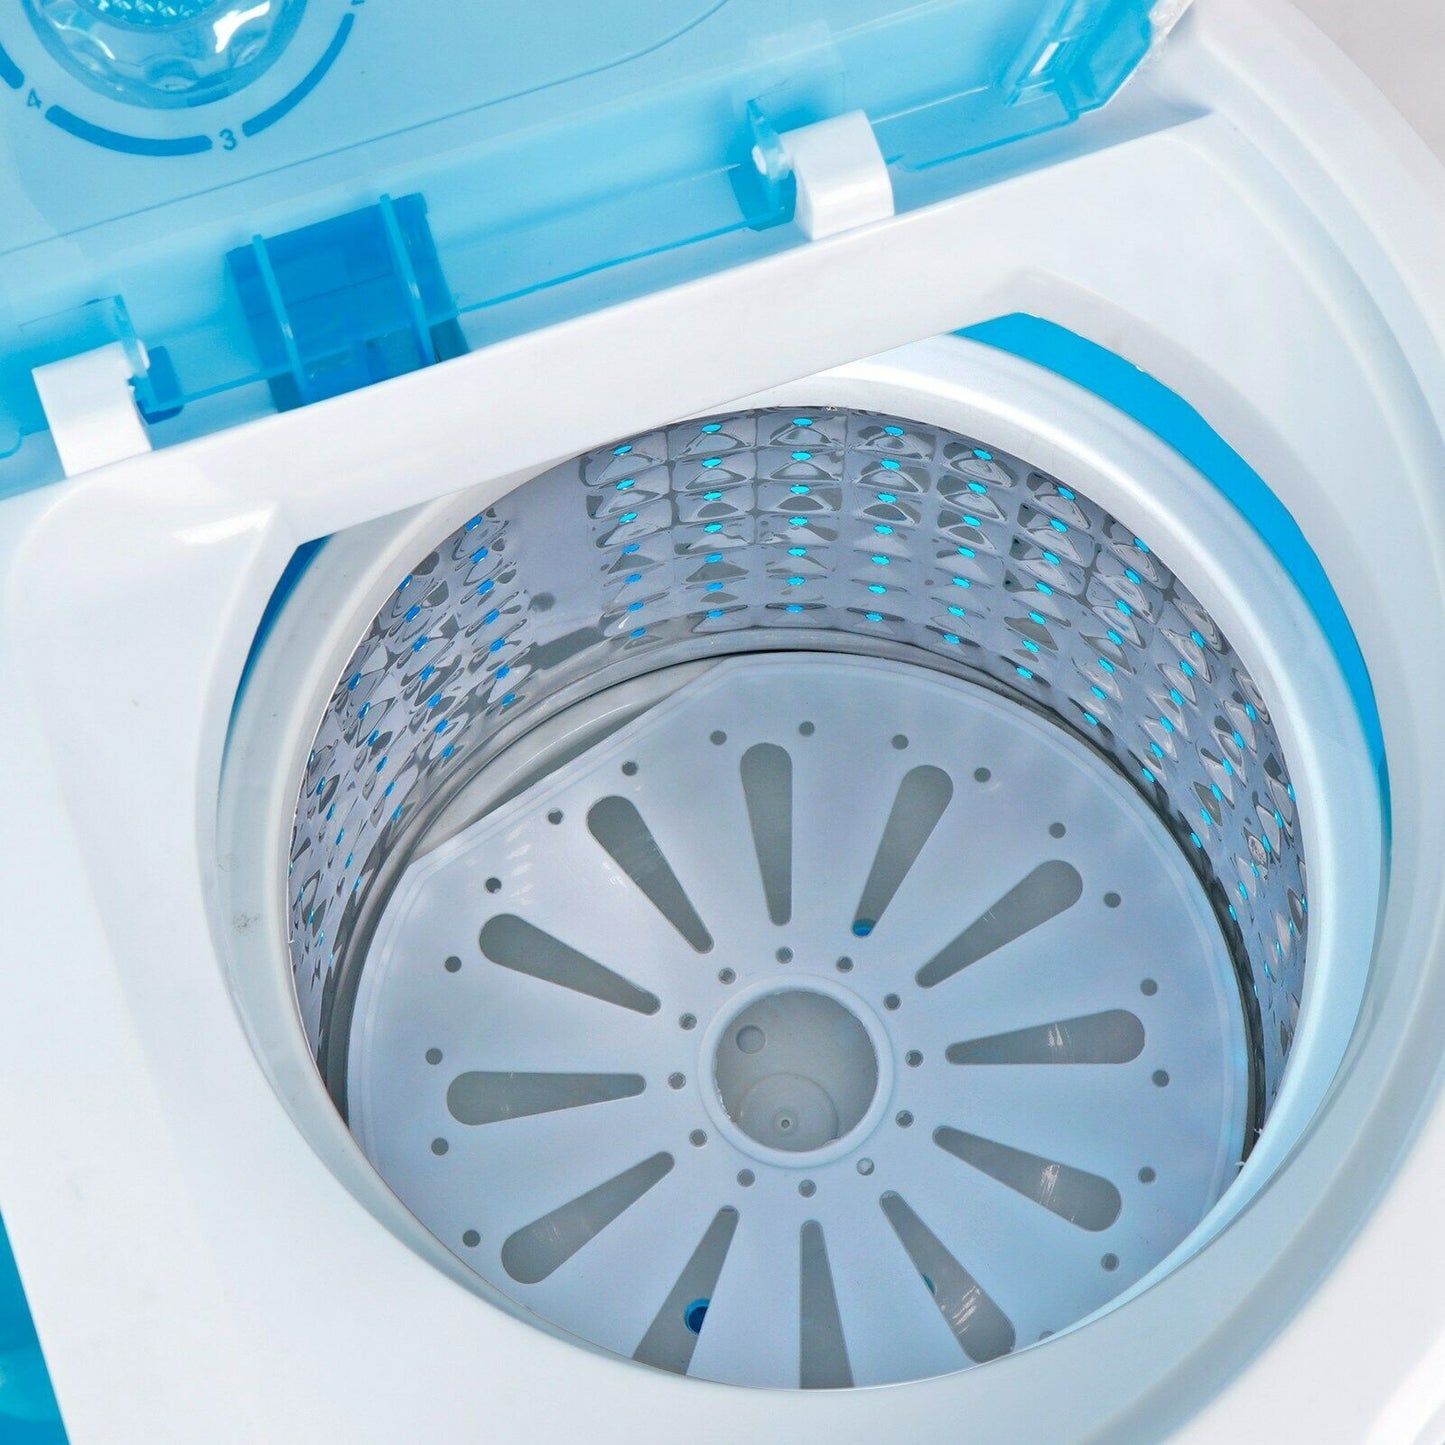 Portable Mini Clothes Laundry Washing Machine